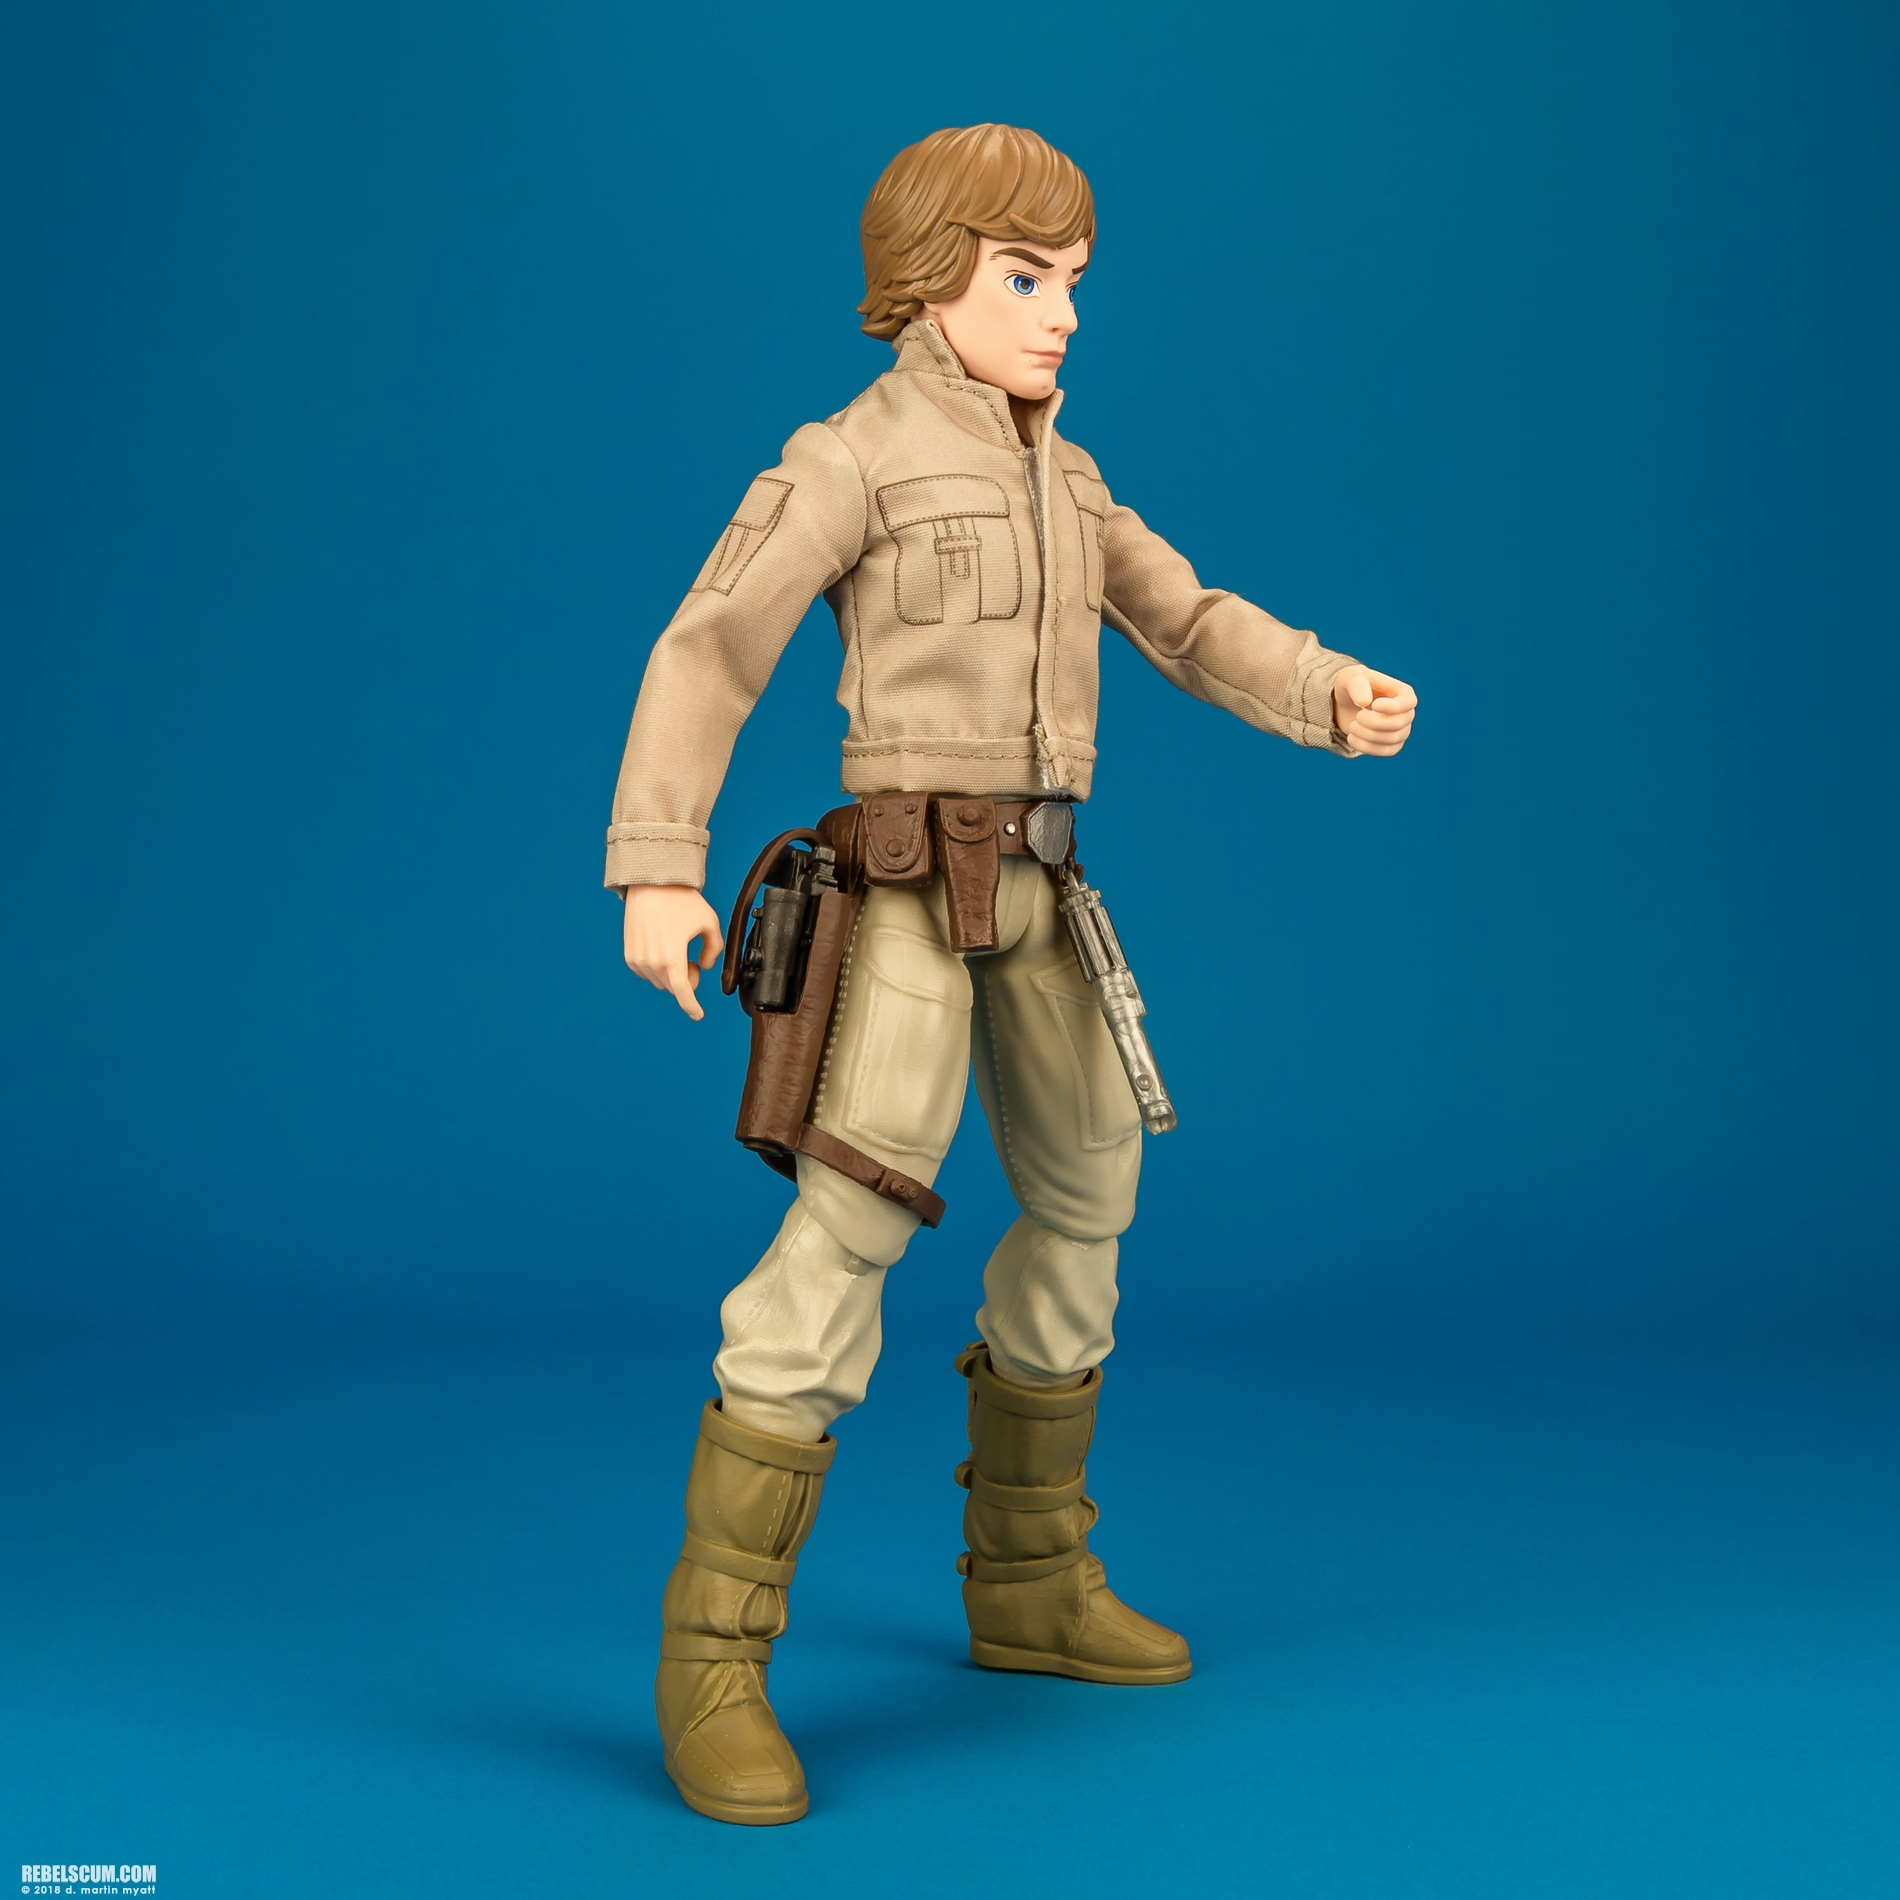 Luke-Skywalker-Yoda-Forces-Of-Destiny-Hasbro-Star-Wars-002.jpg